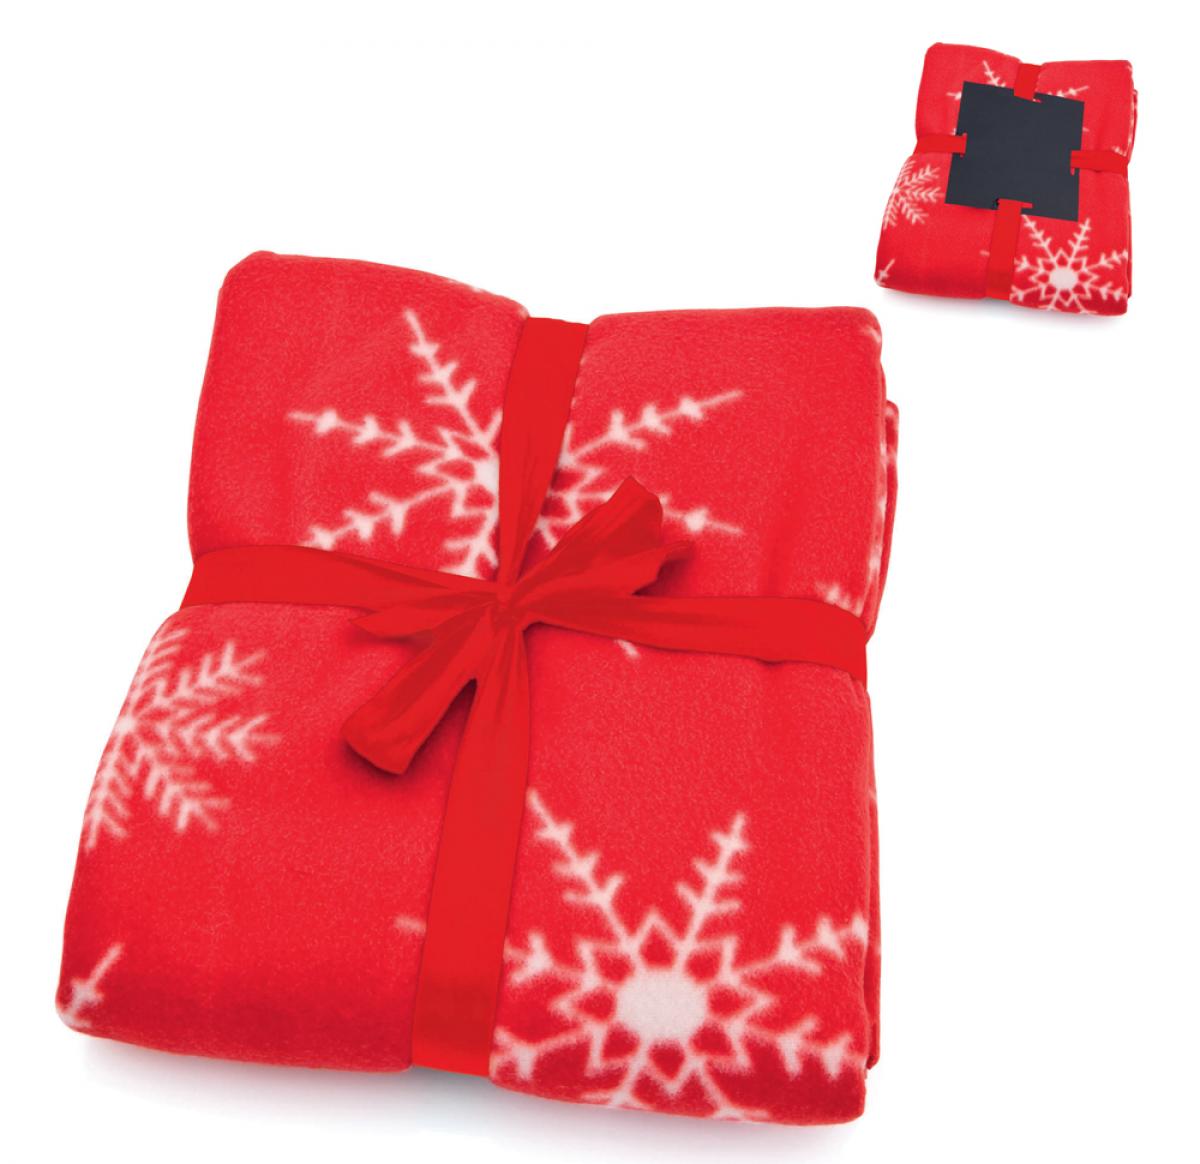 Winter Fleece Blanket / Throw - Snowflake Design